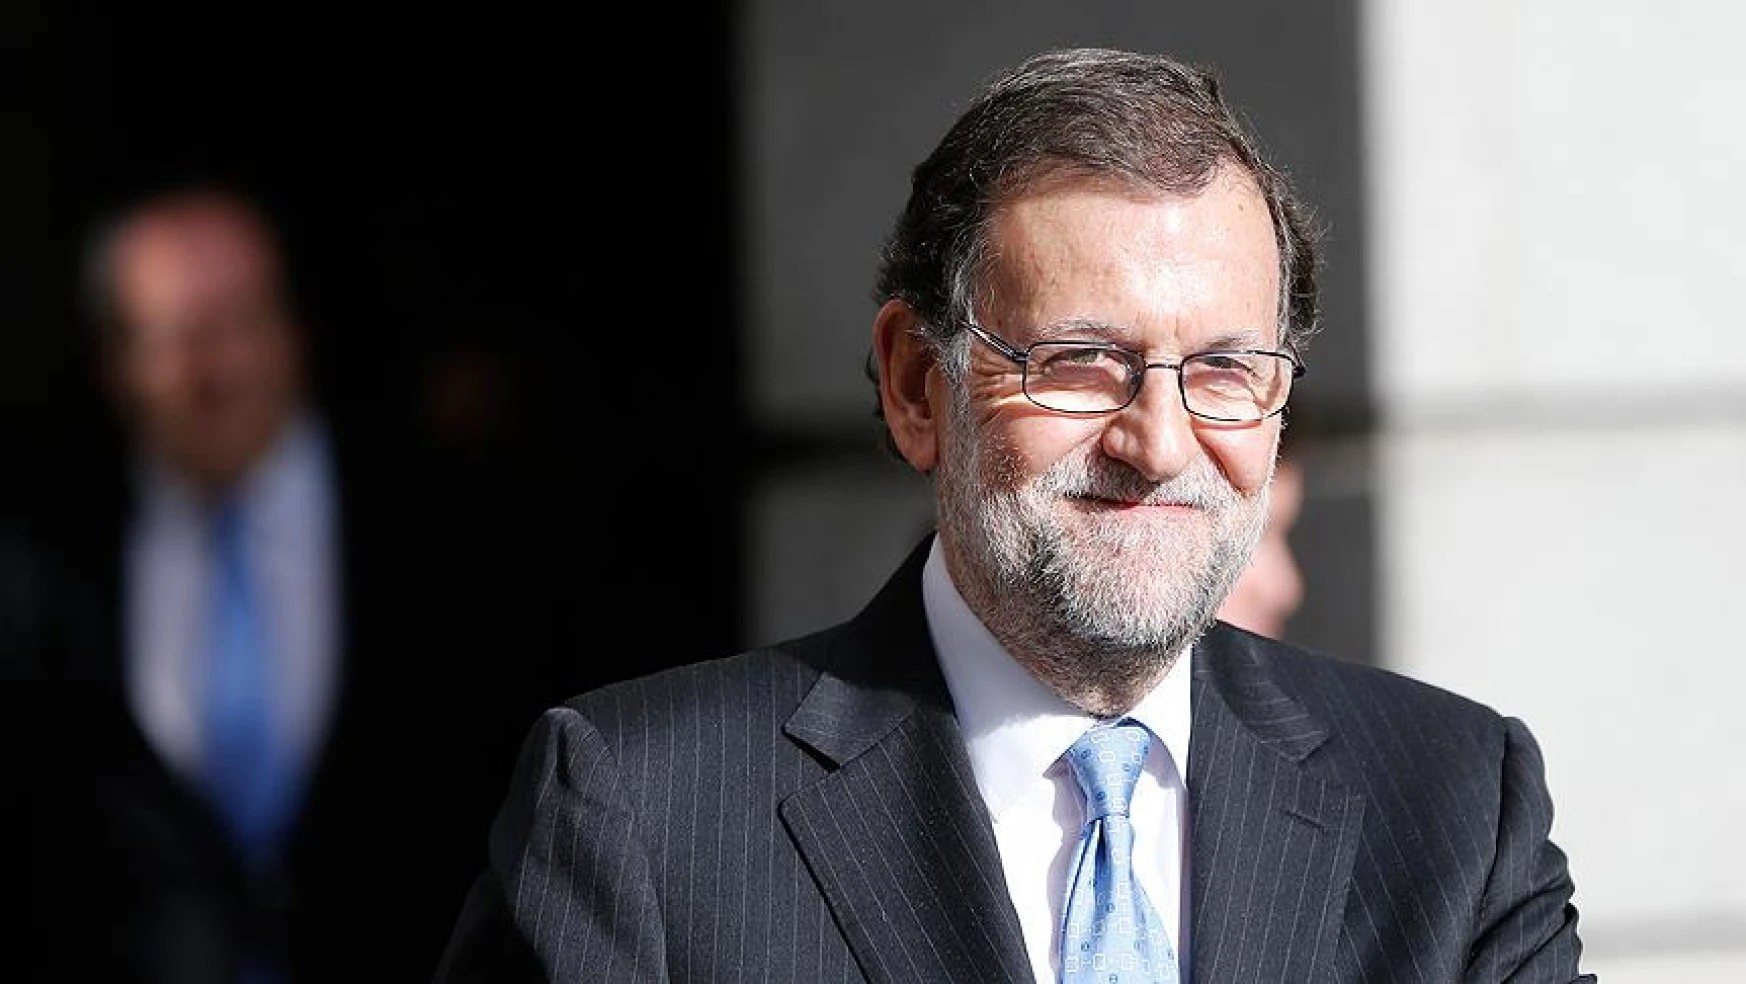 İspanya Başbakanı sahte Katalan başkanına randevu verdi